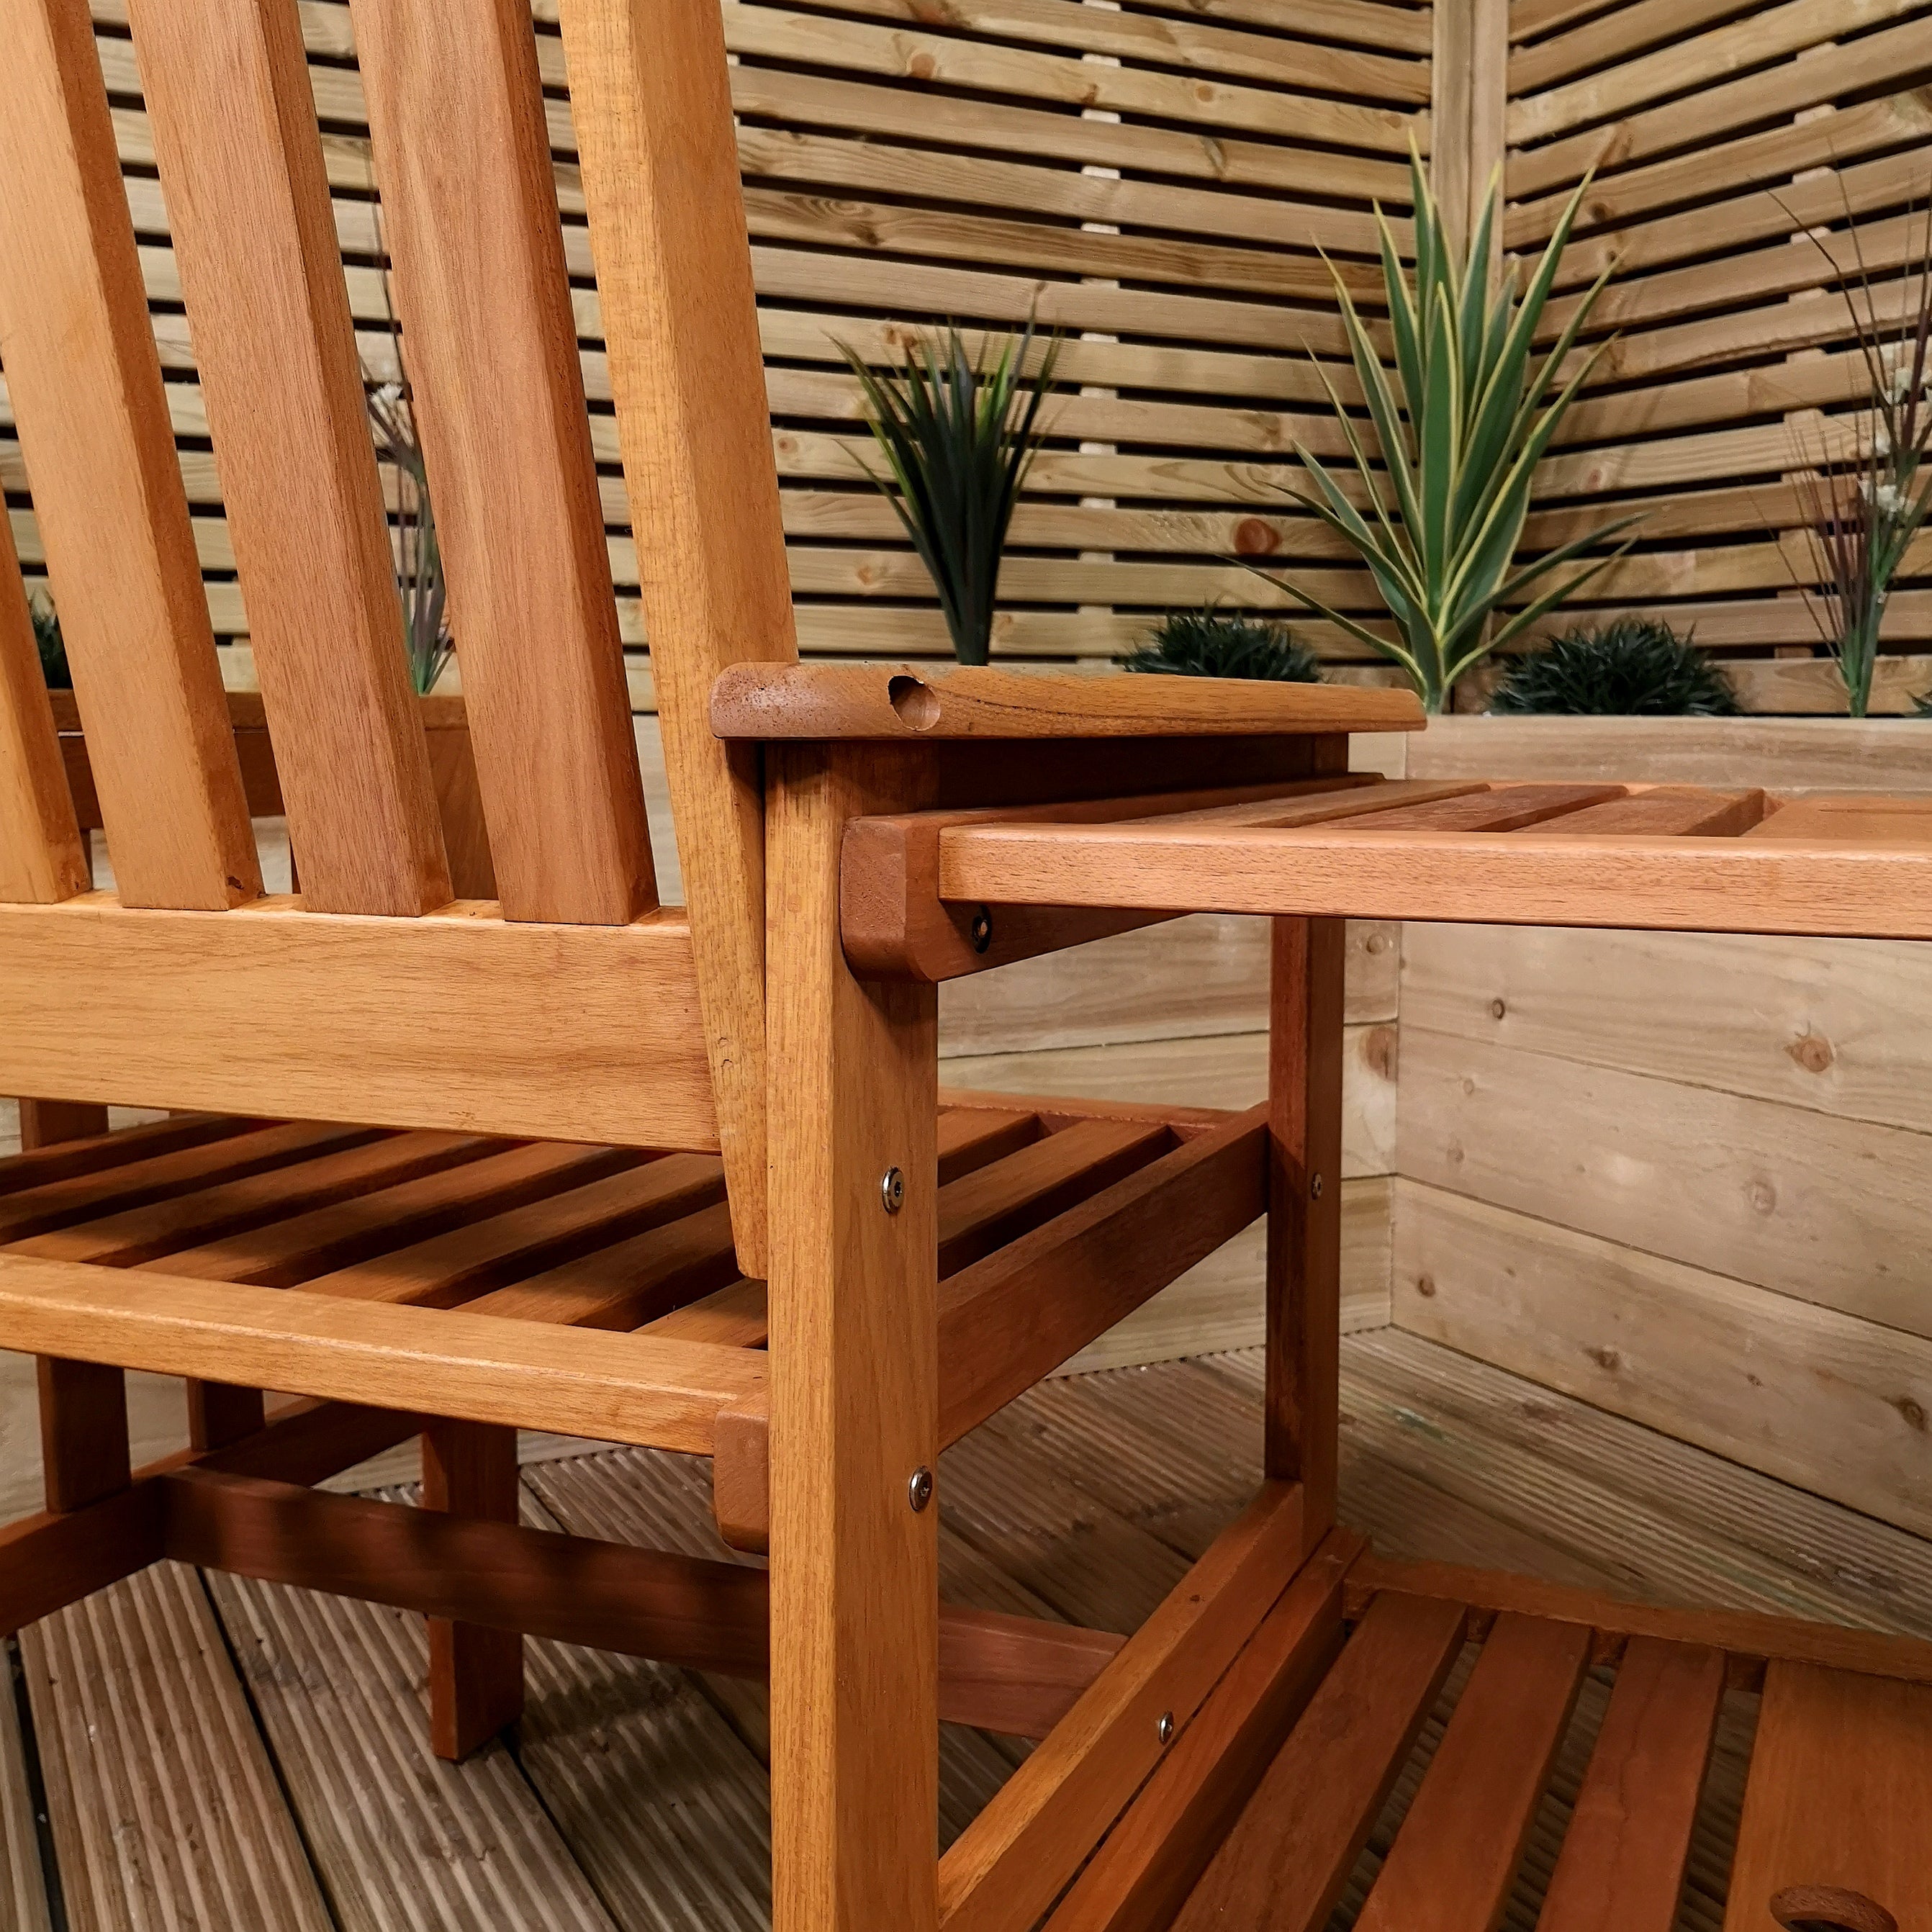 2 Person Wooden Garden Bench Love Seat & Table Garden Furniture